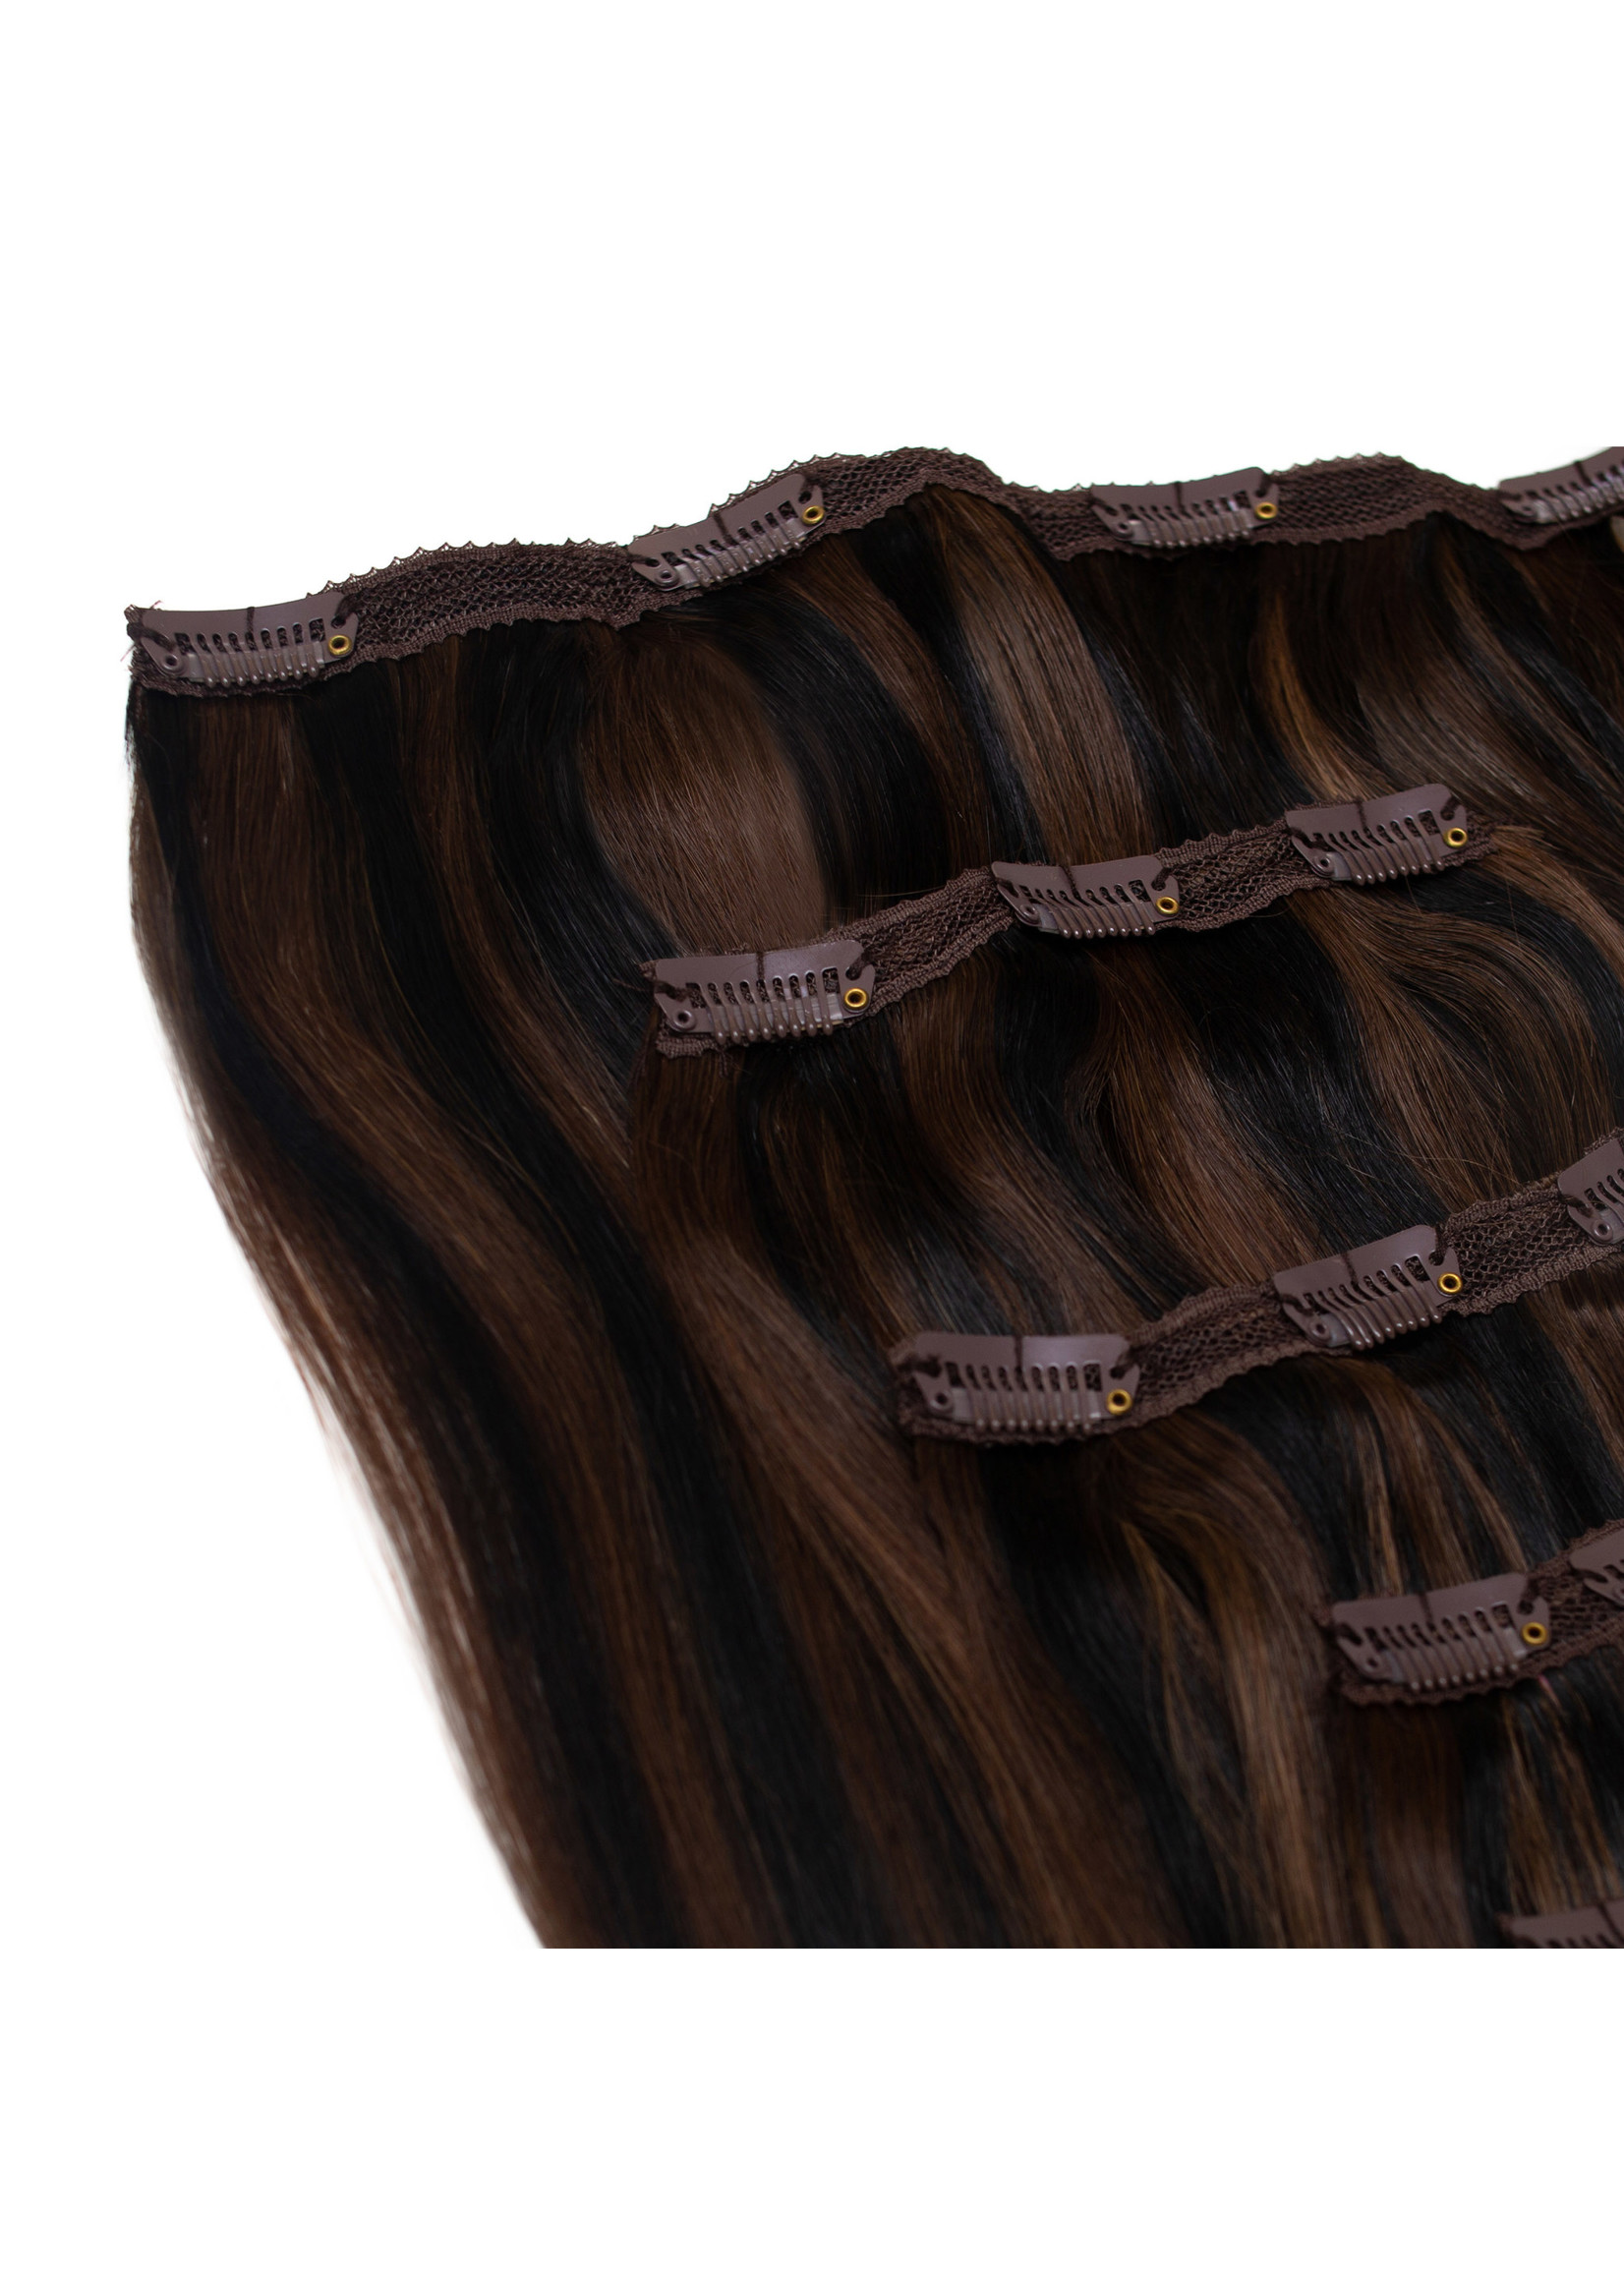 Seamless1 Seamless1 Human Hair Clip-in 5pc Hair Extensions 21.5 Inches - Mocha Blend